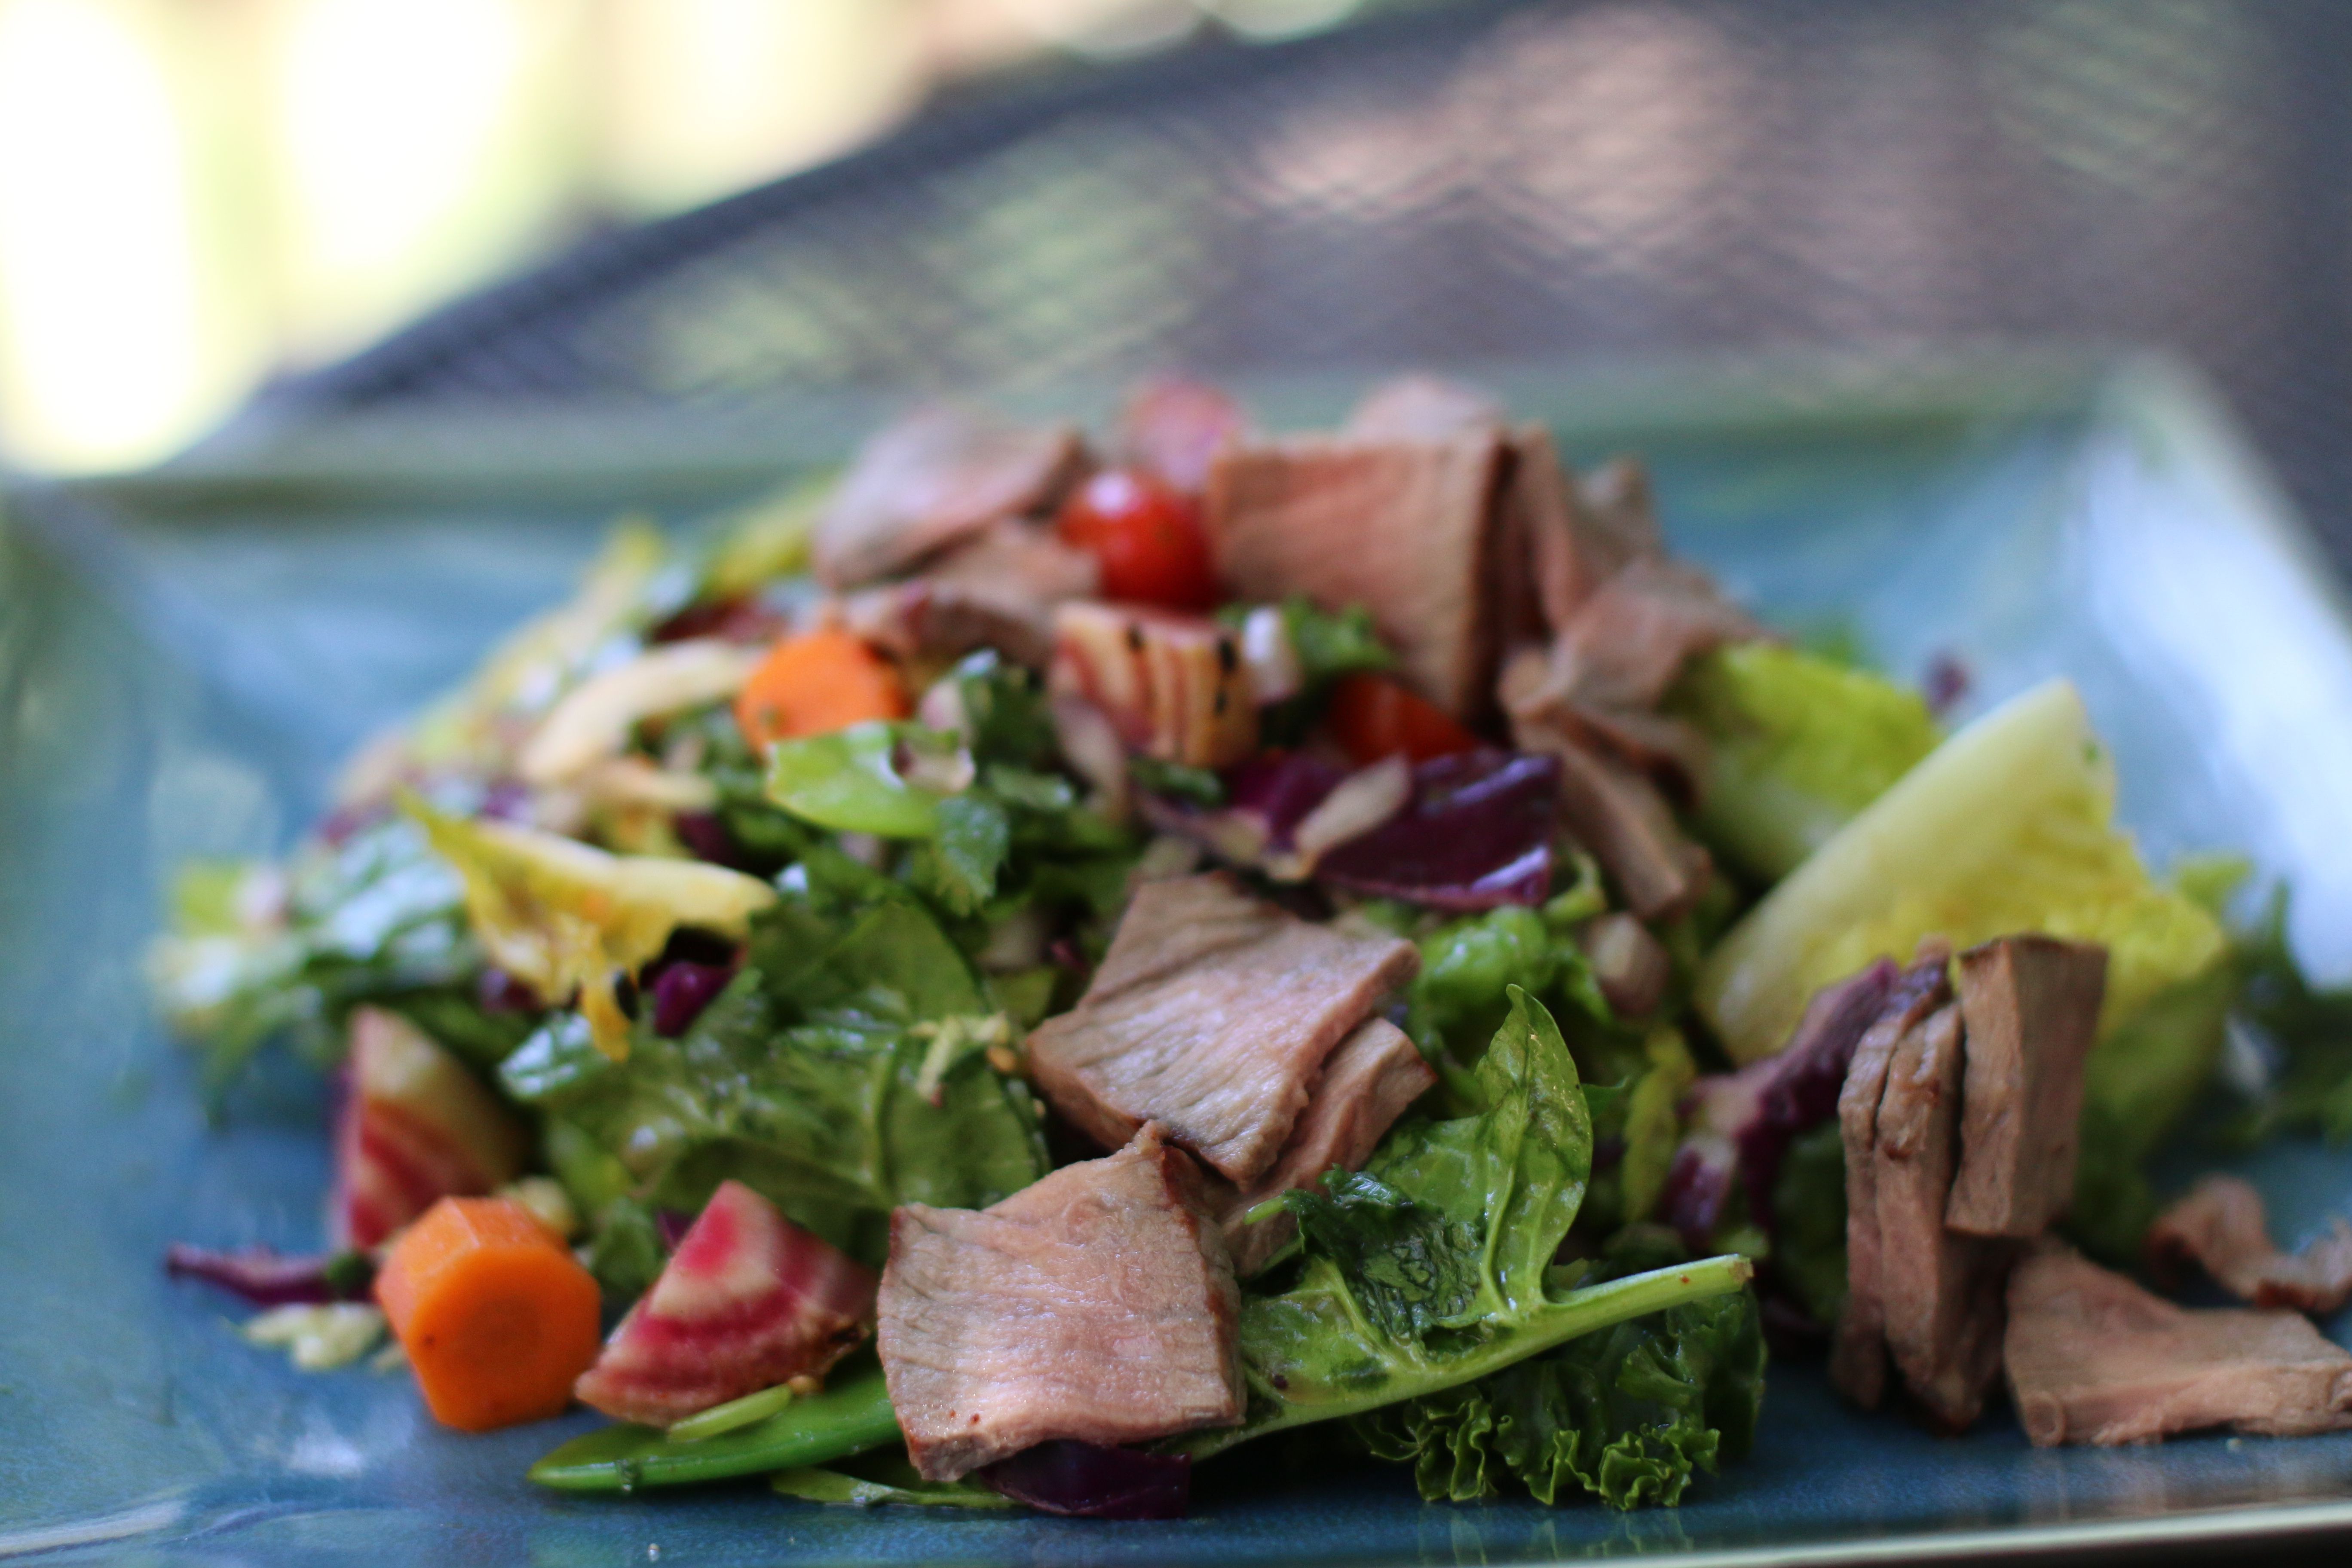 Thai Beef Salad - Summer style